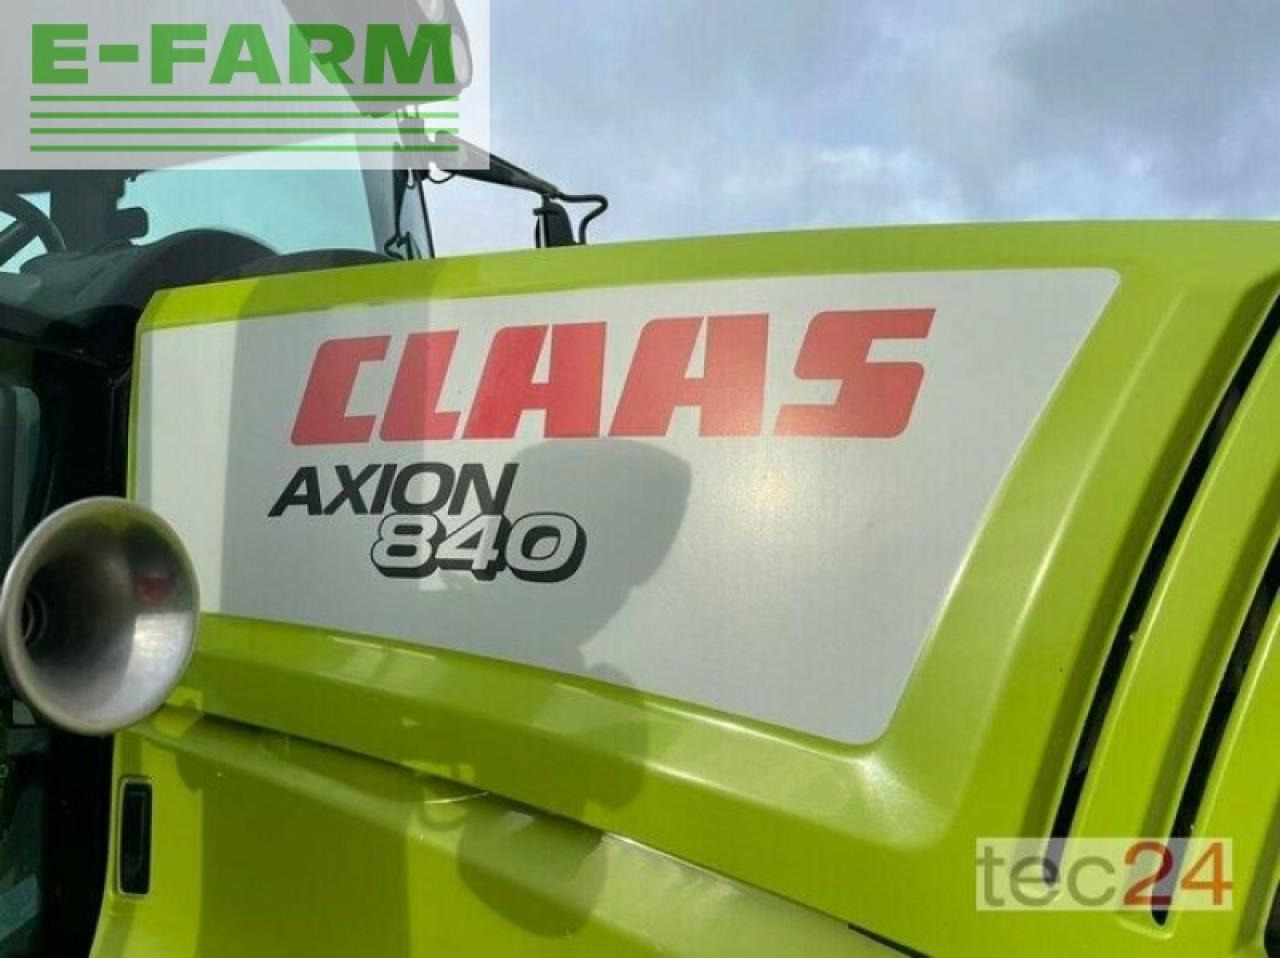 Farm tractor CLAAS axion 840 cvt